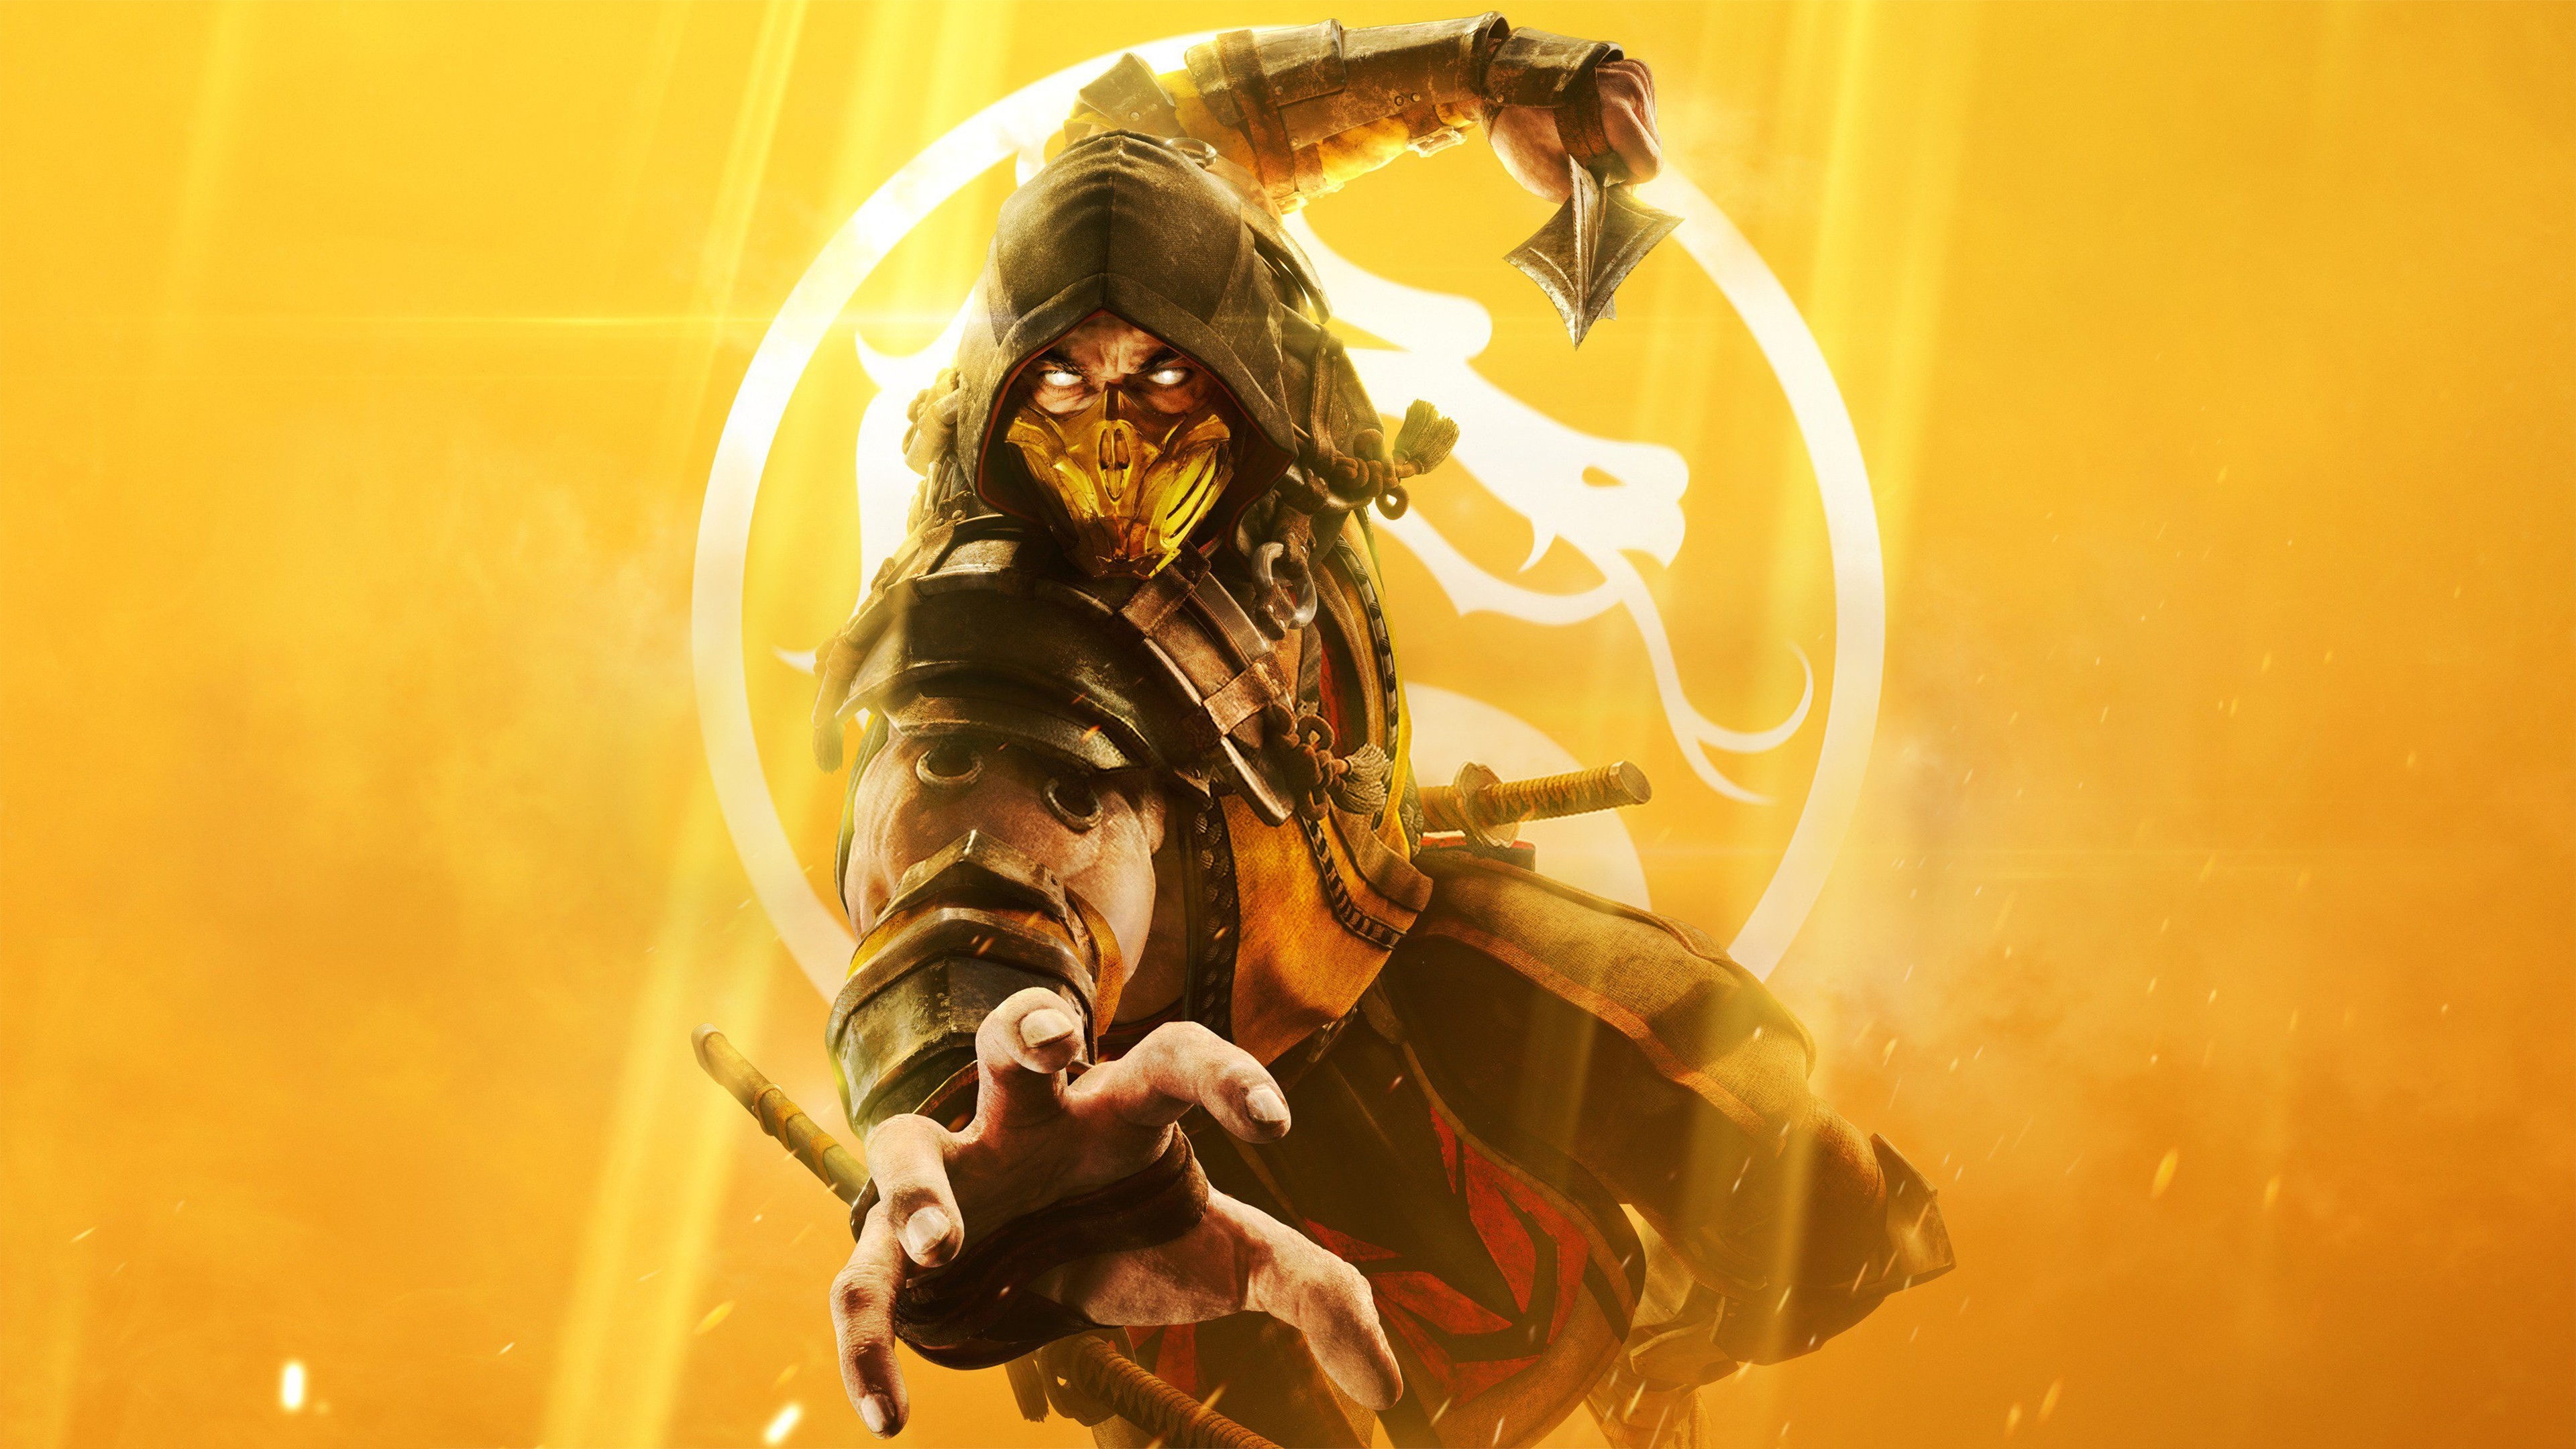 Mortal Kombat K Poster Wallpaper Hd Games K Wallpapers Images